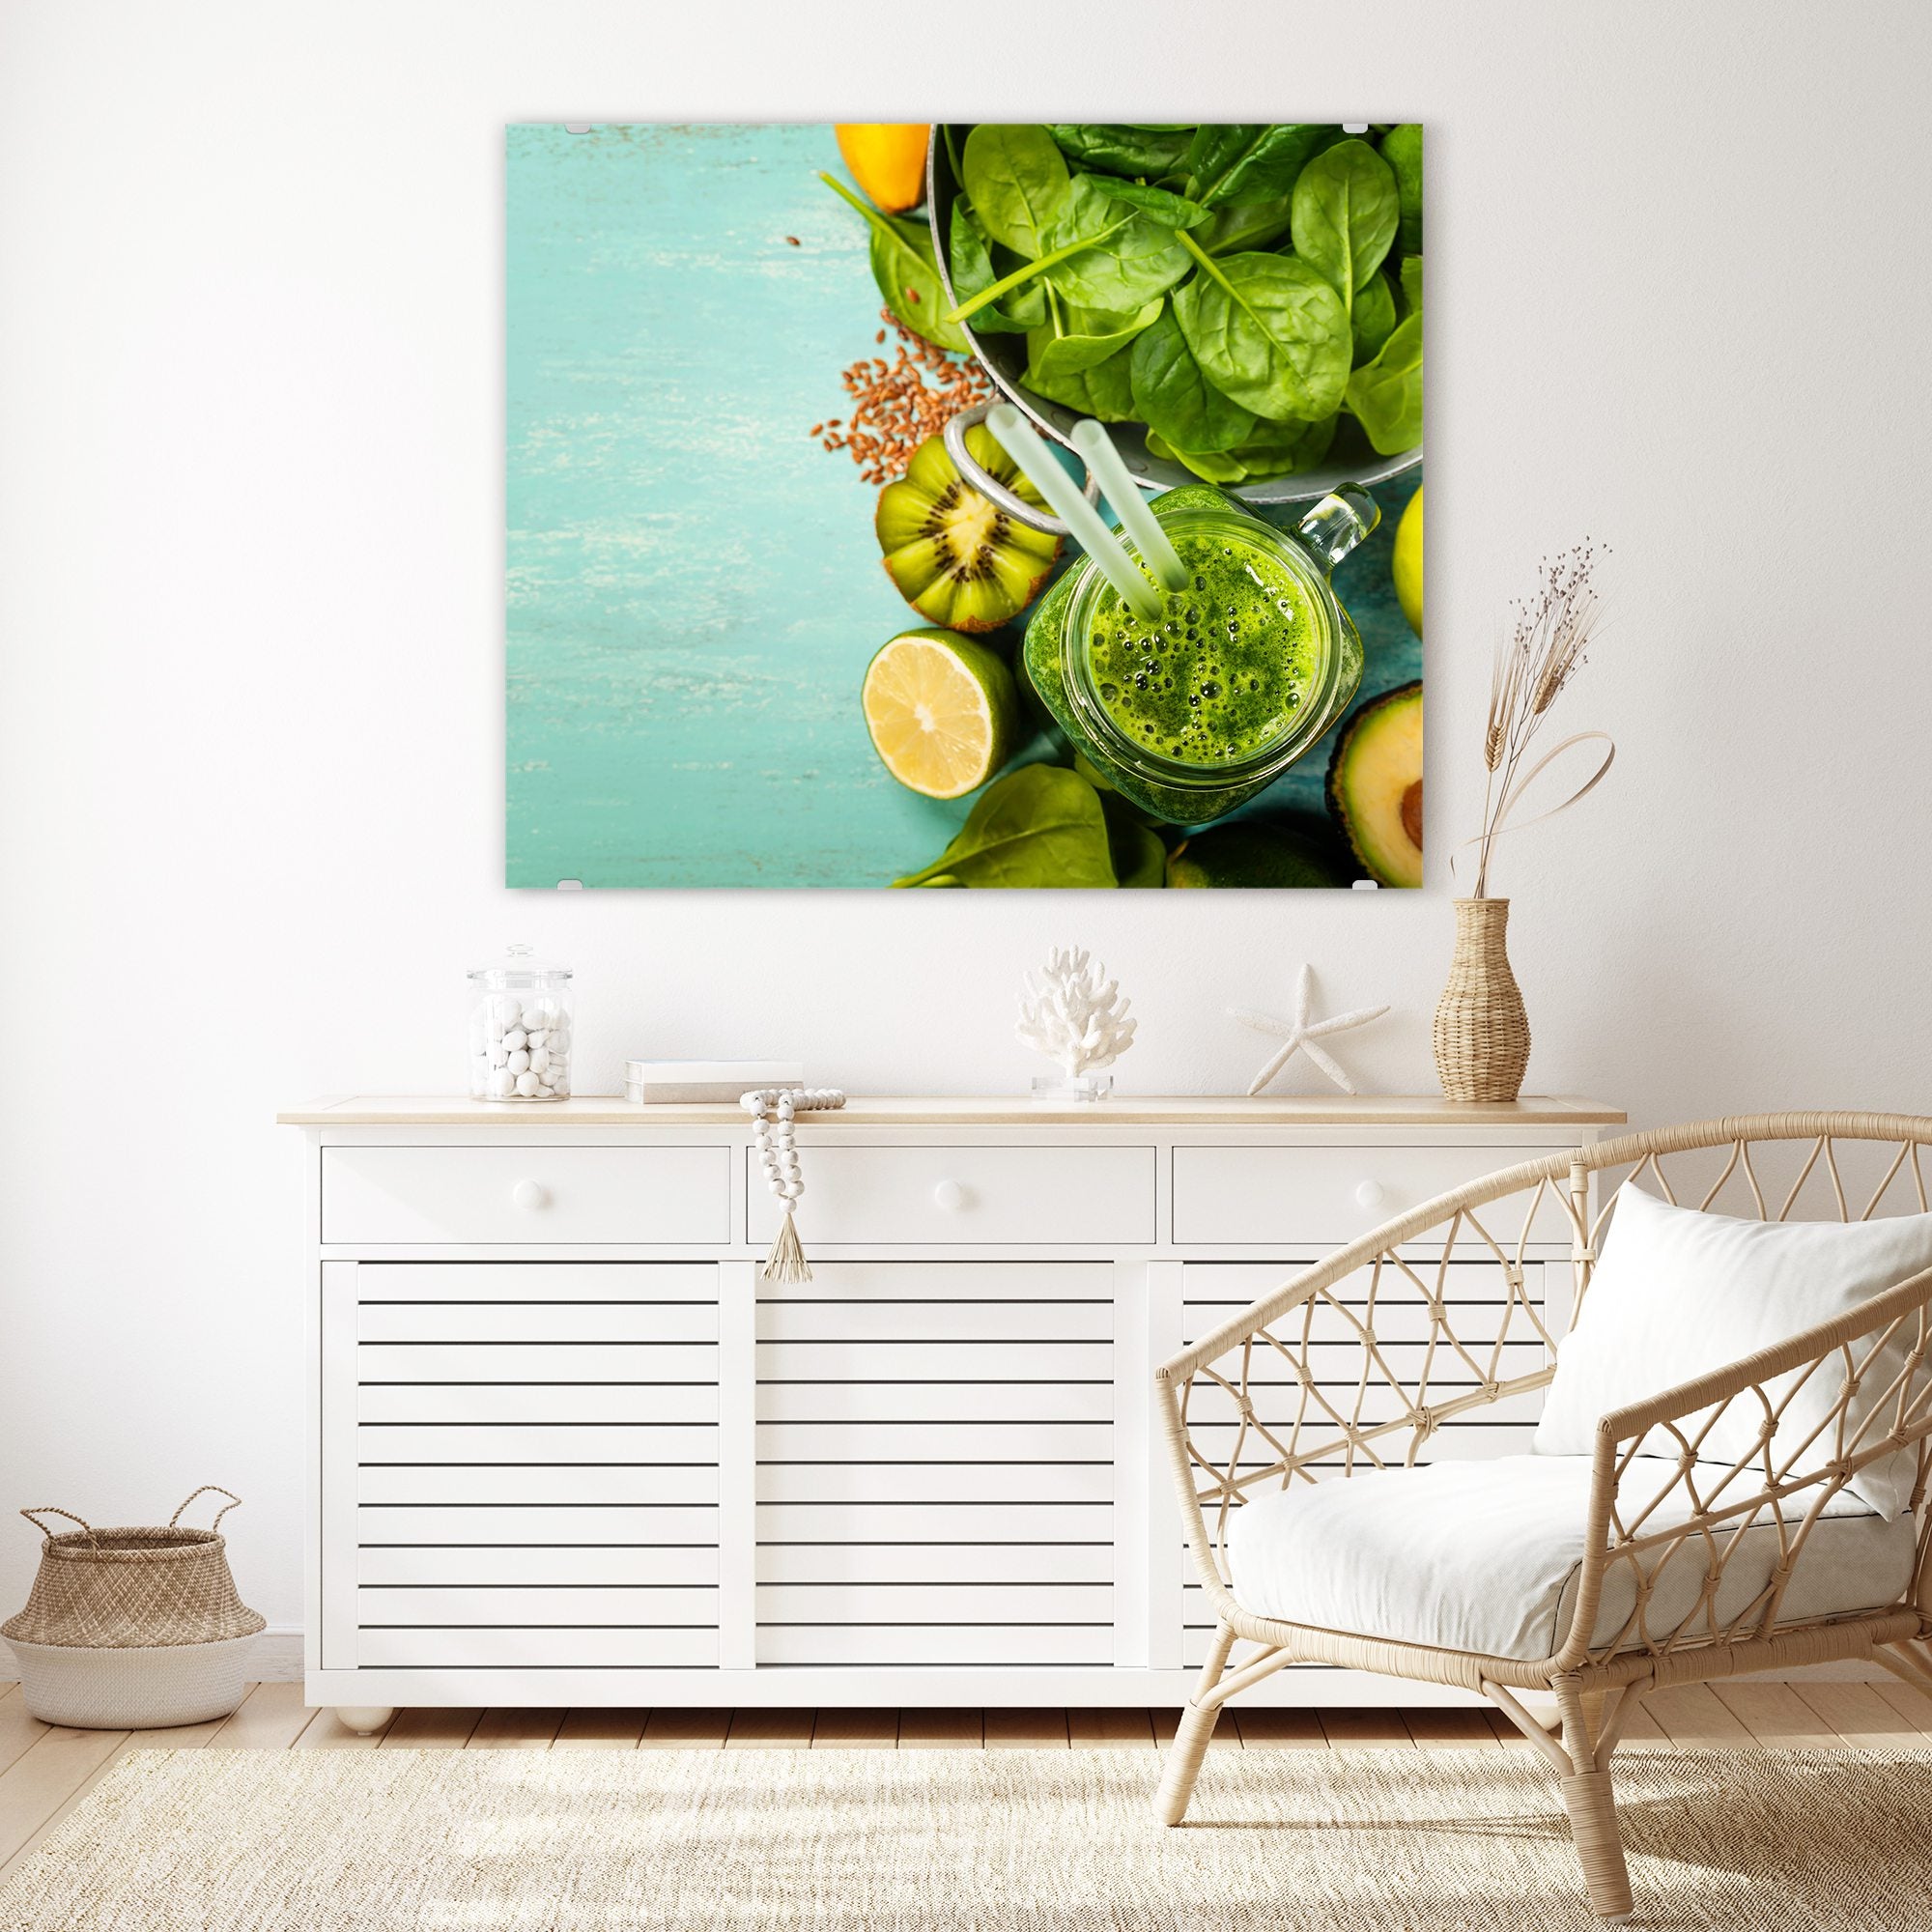 Wandbild - Salat und Avocado